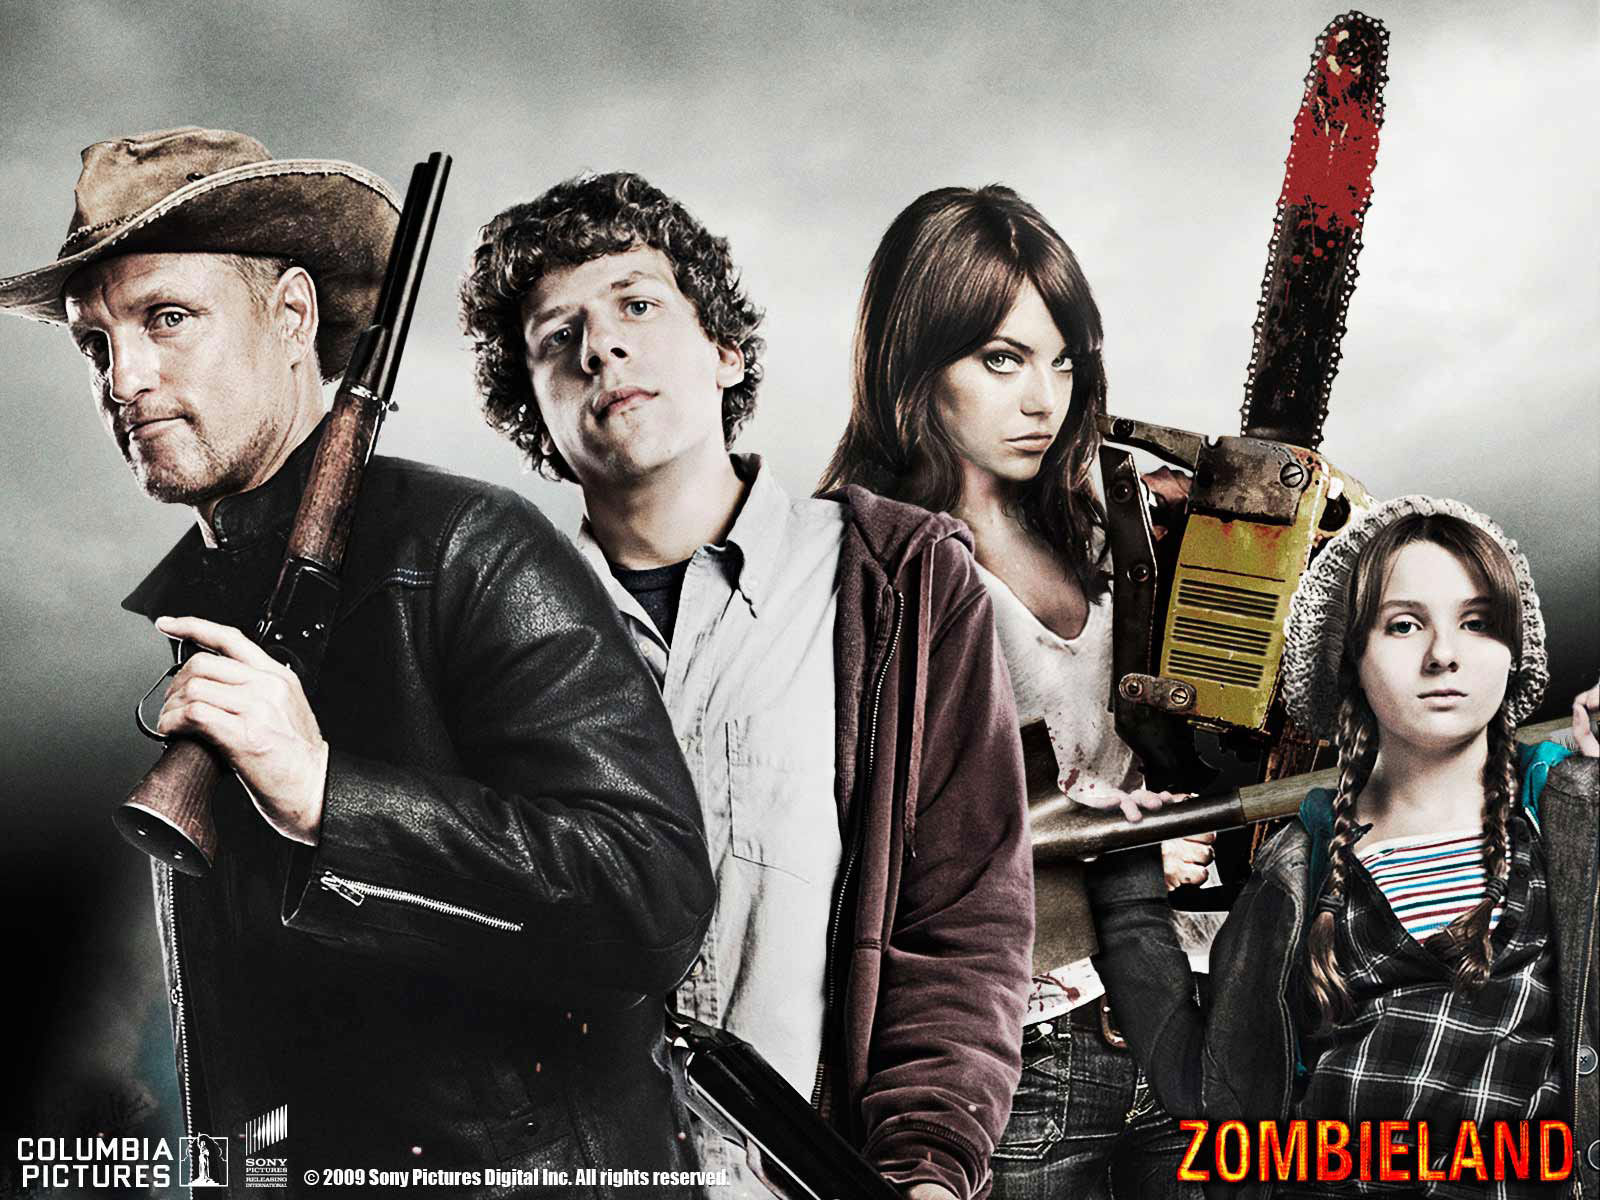 Jesse Eisenberg in Zombieland